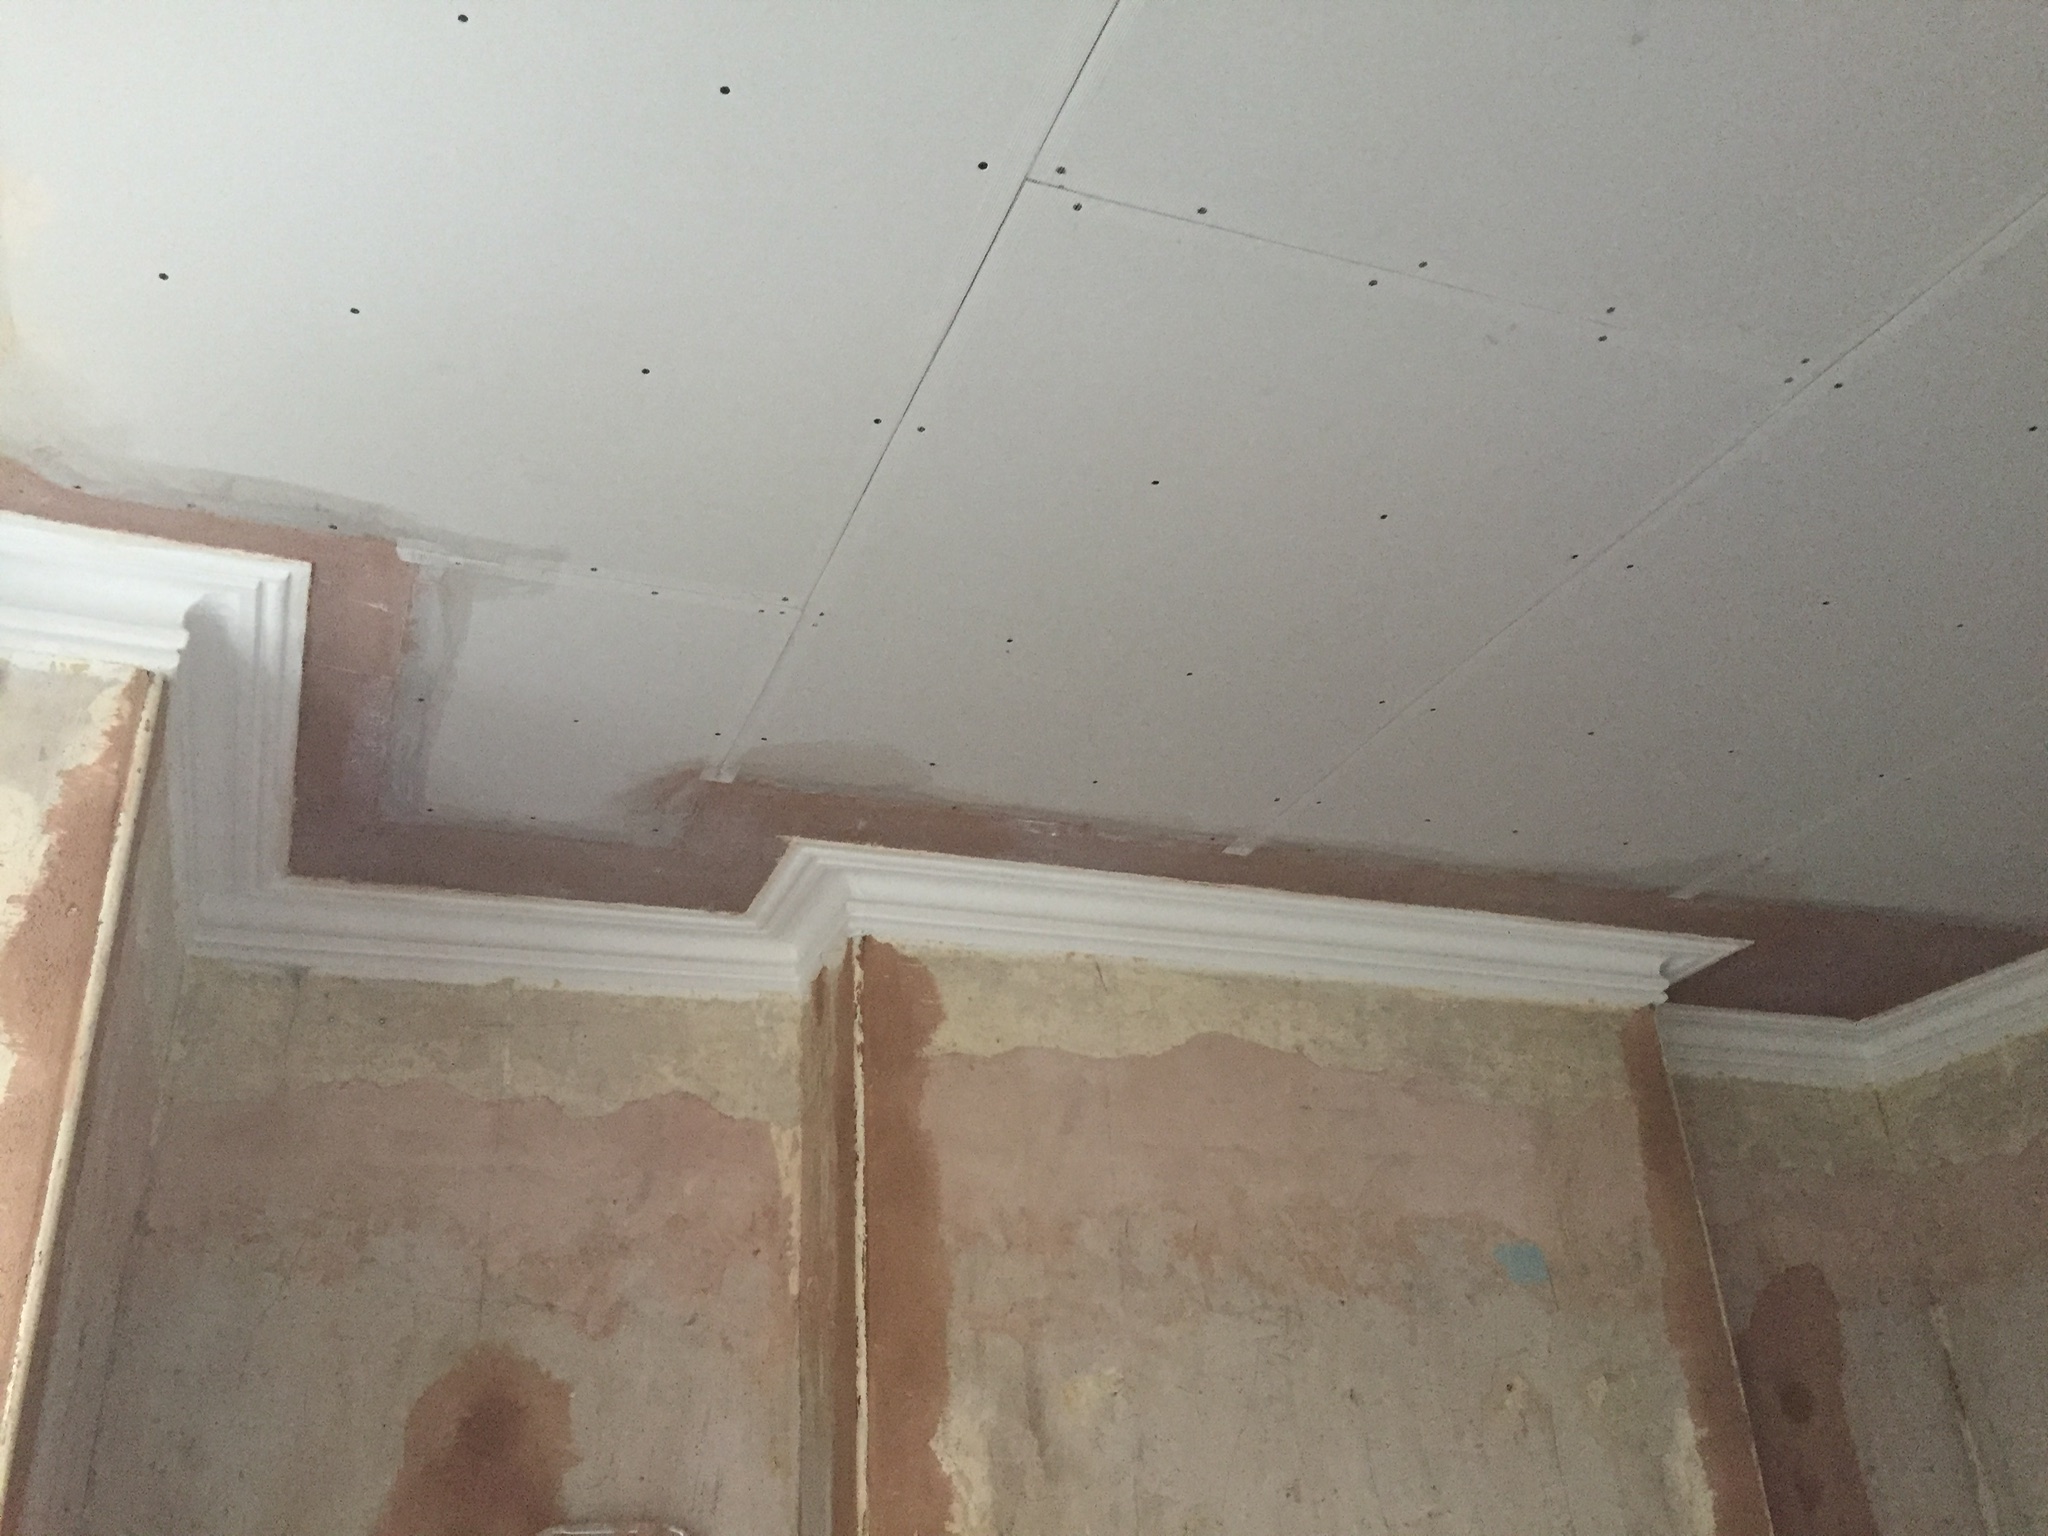 Best steps to repair this ceiling?